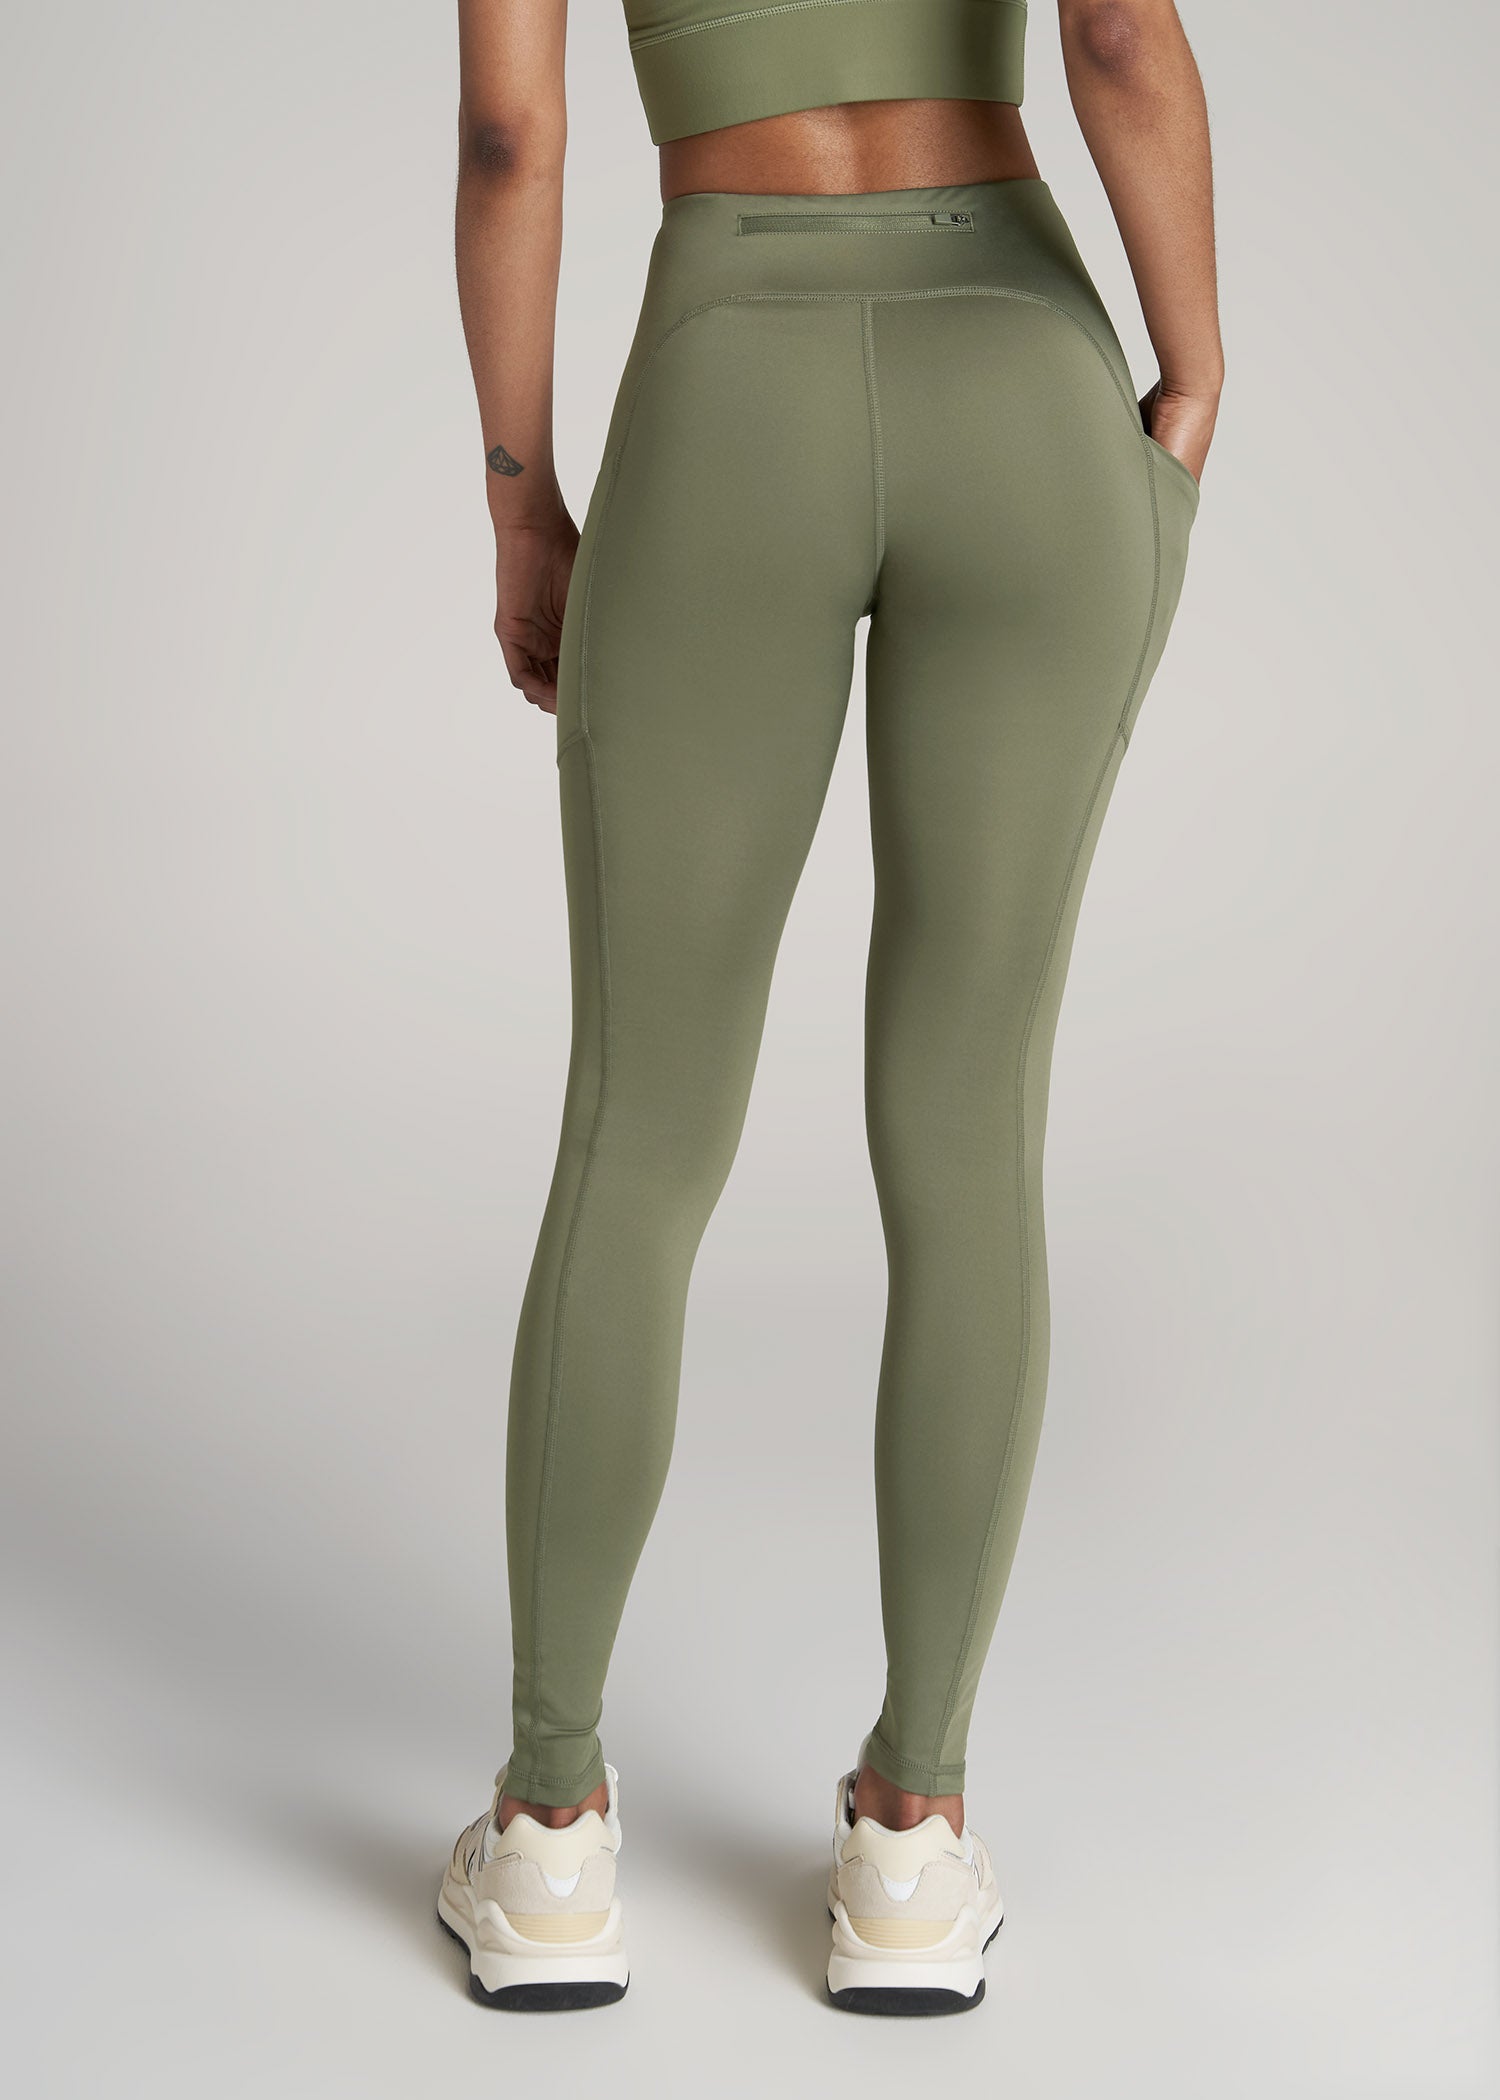 Buy Olive Green Leggings for Women by PERFORMAX Online